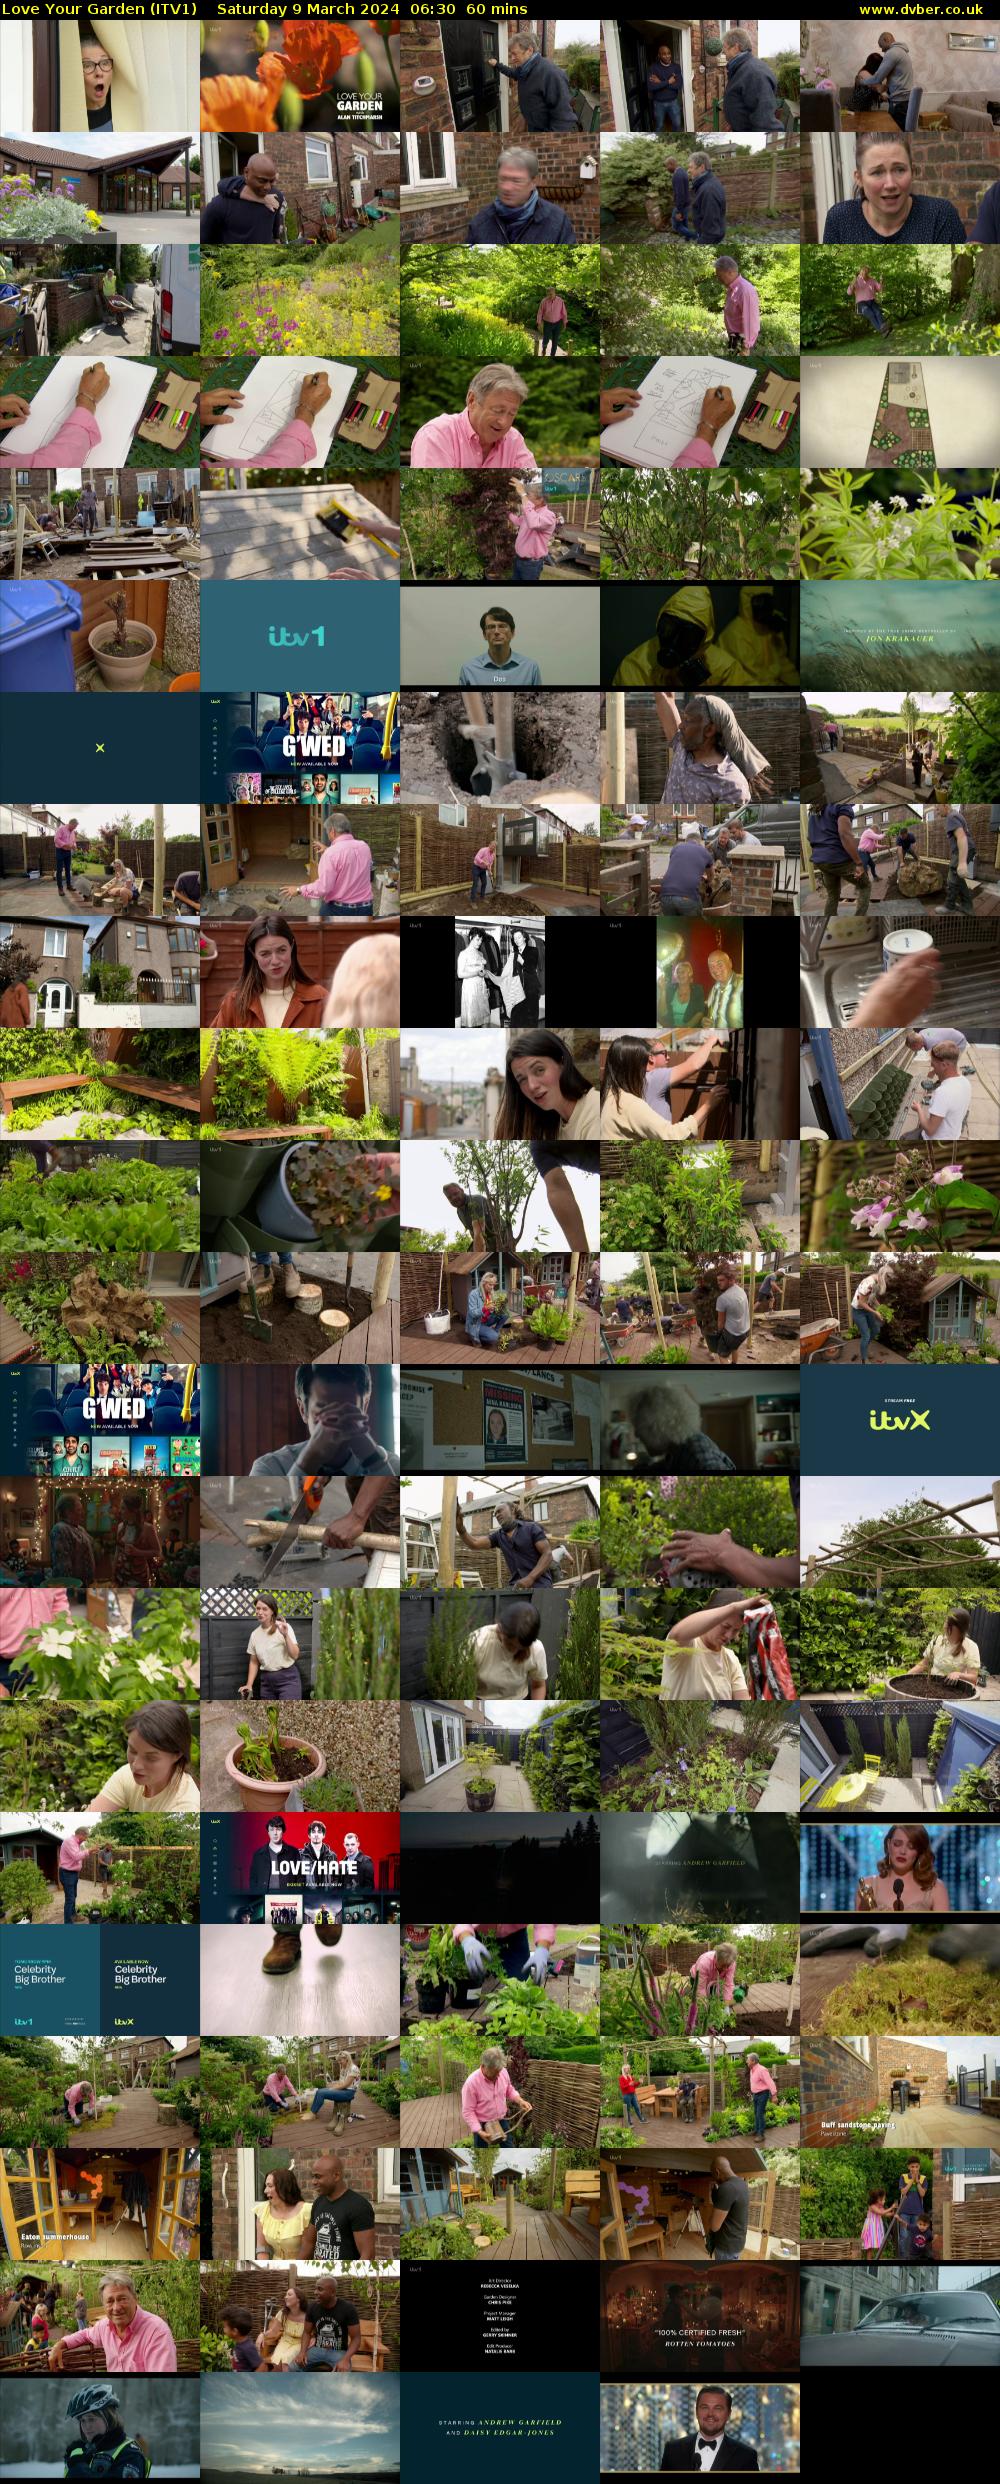 Love Your Garden (ITV1) Saturday 9 March 2024 06:30 - 07:30